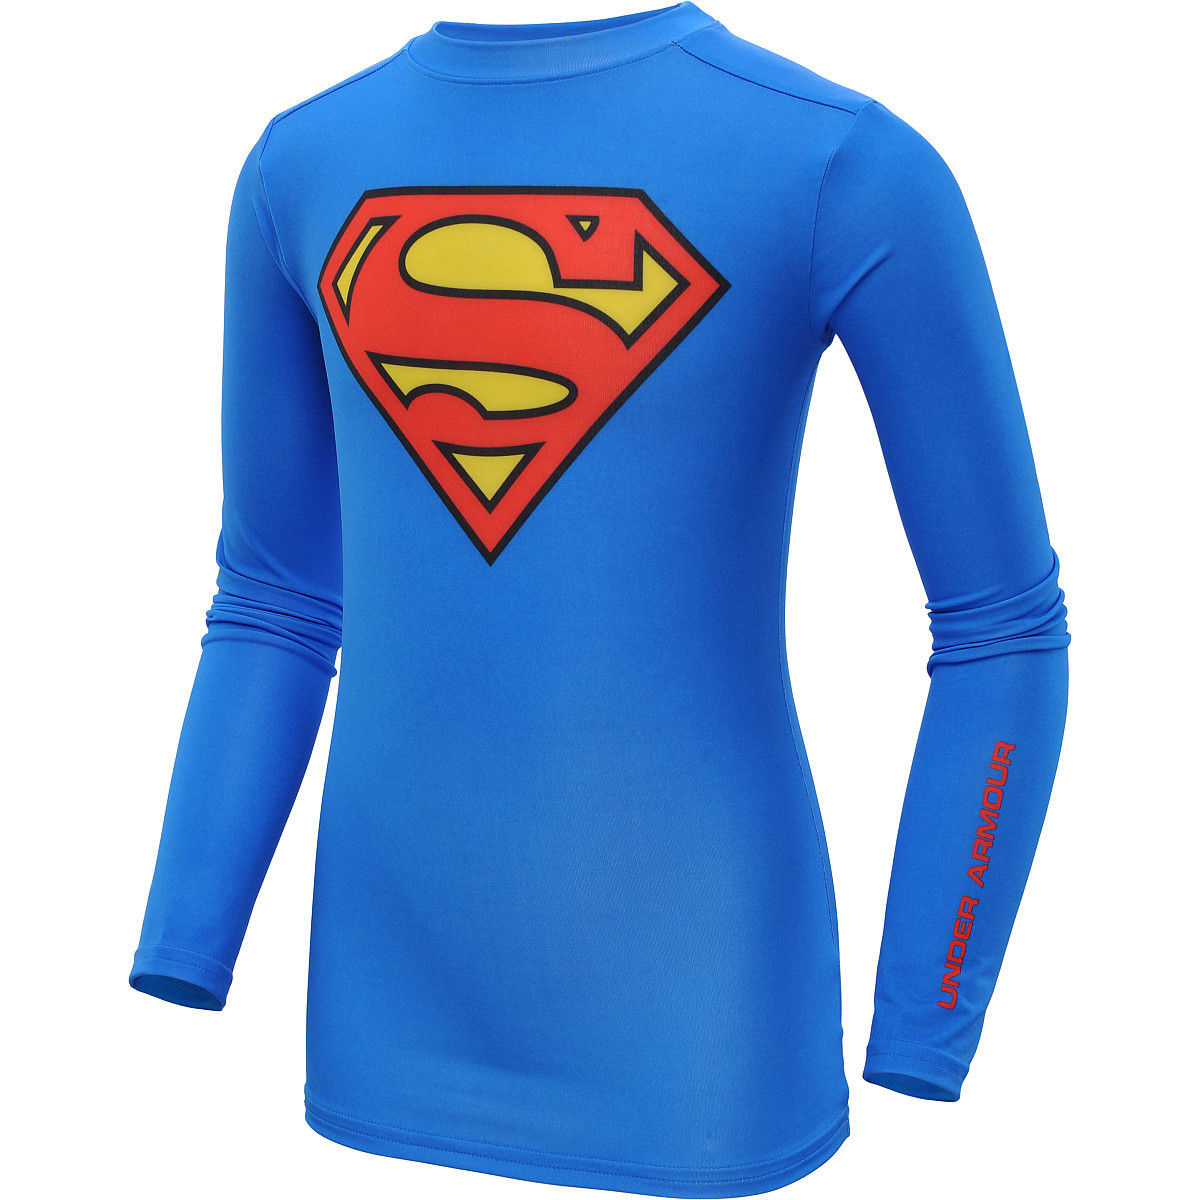 Under Armour Alter Superman L/S Compression Shirt - Venom Collectibles